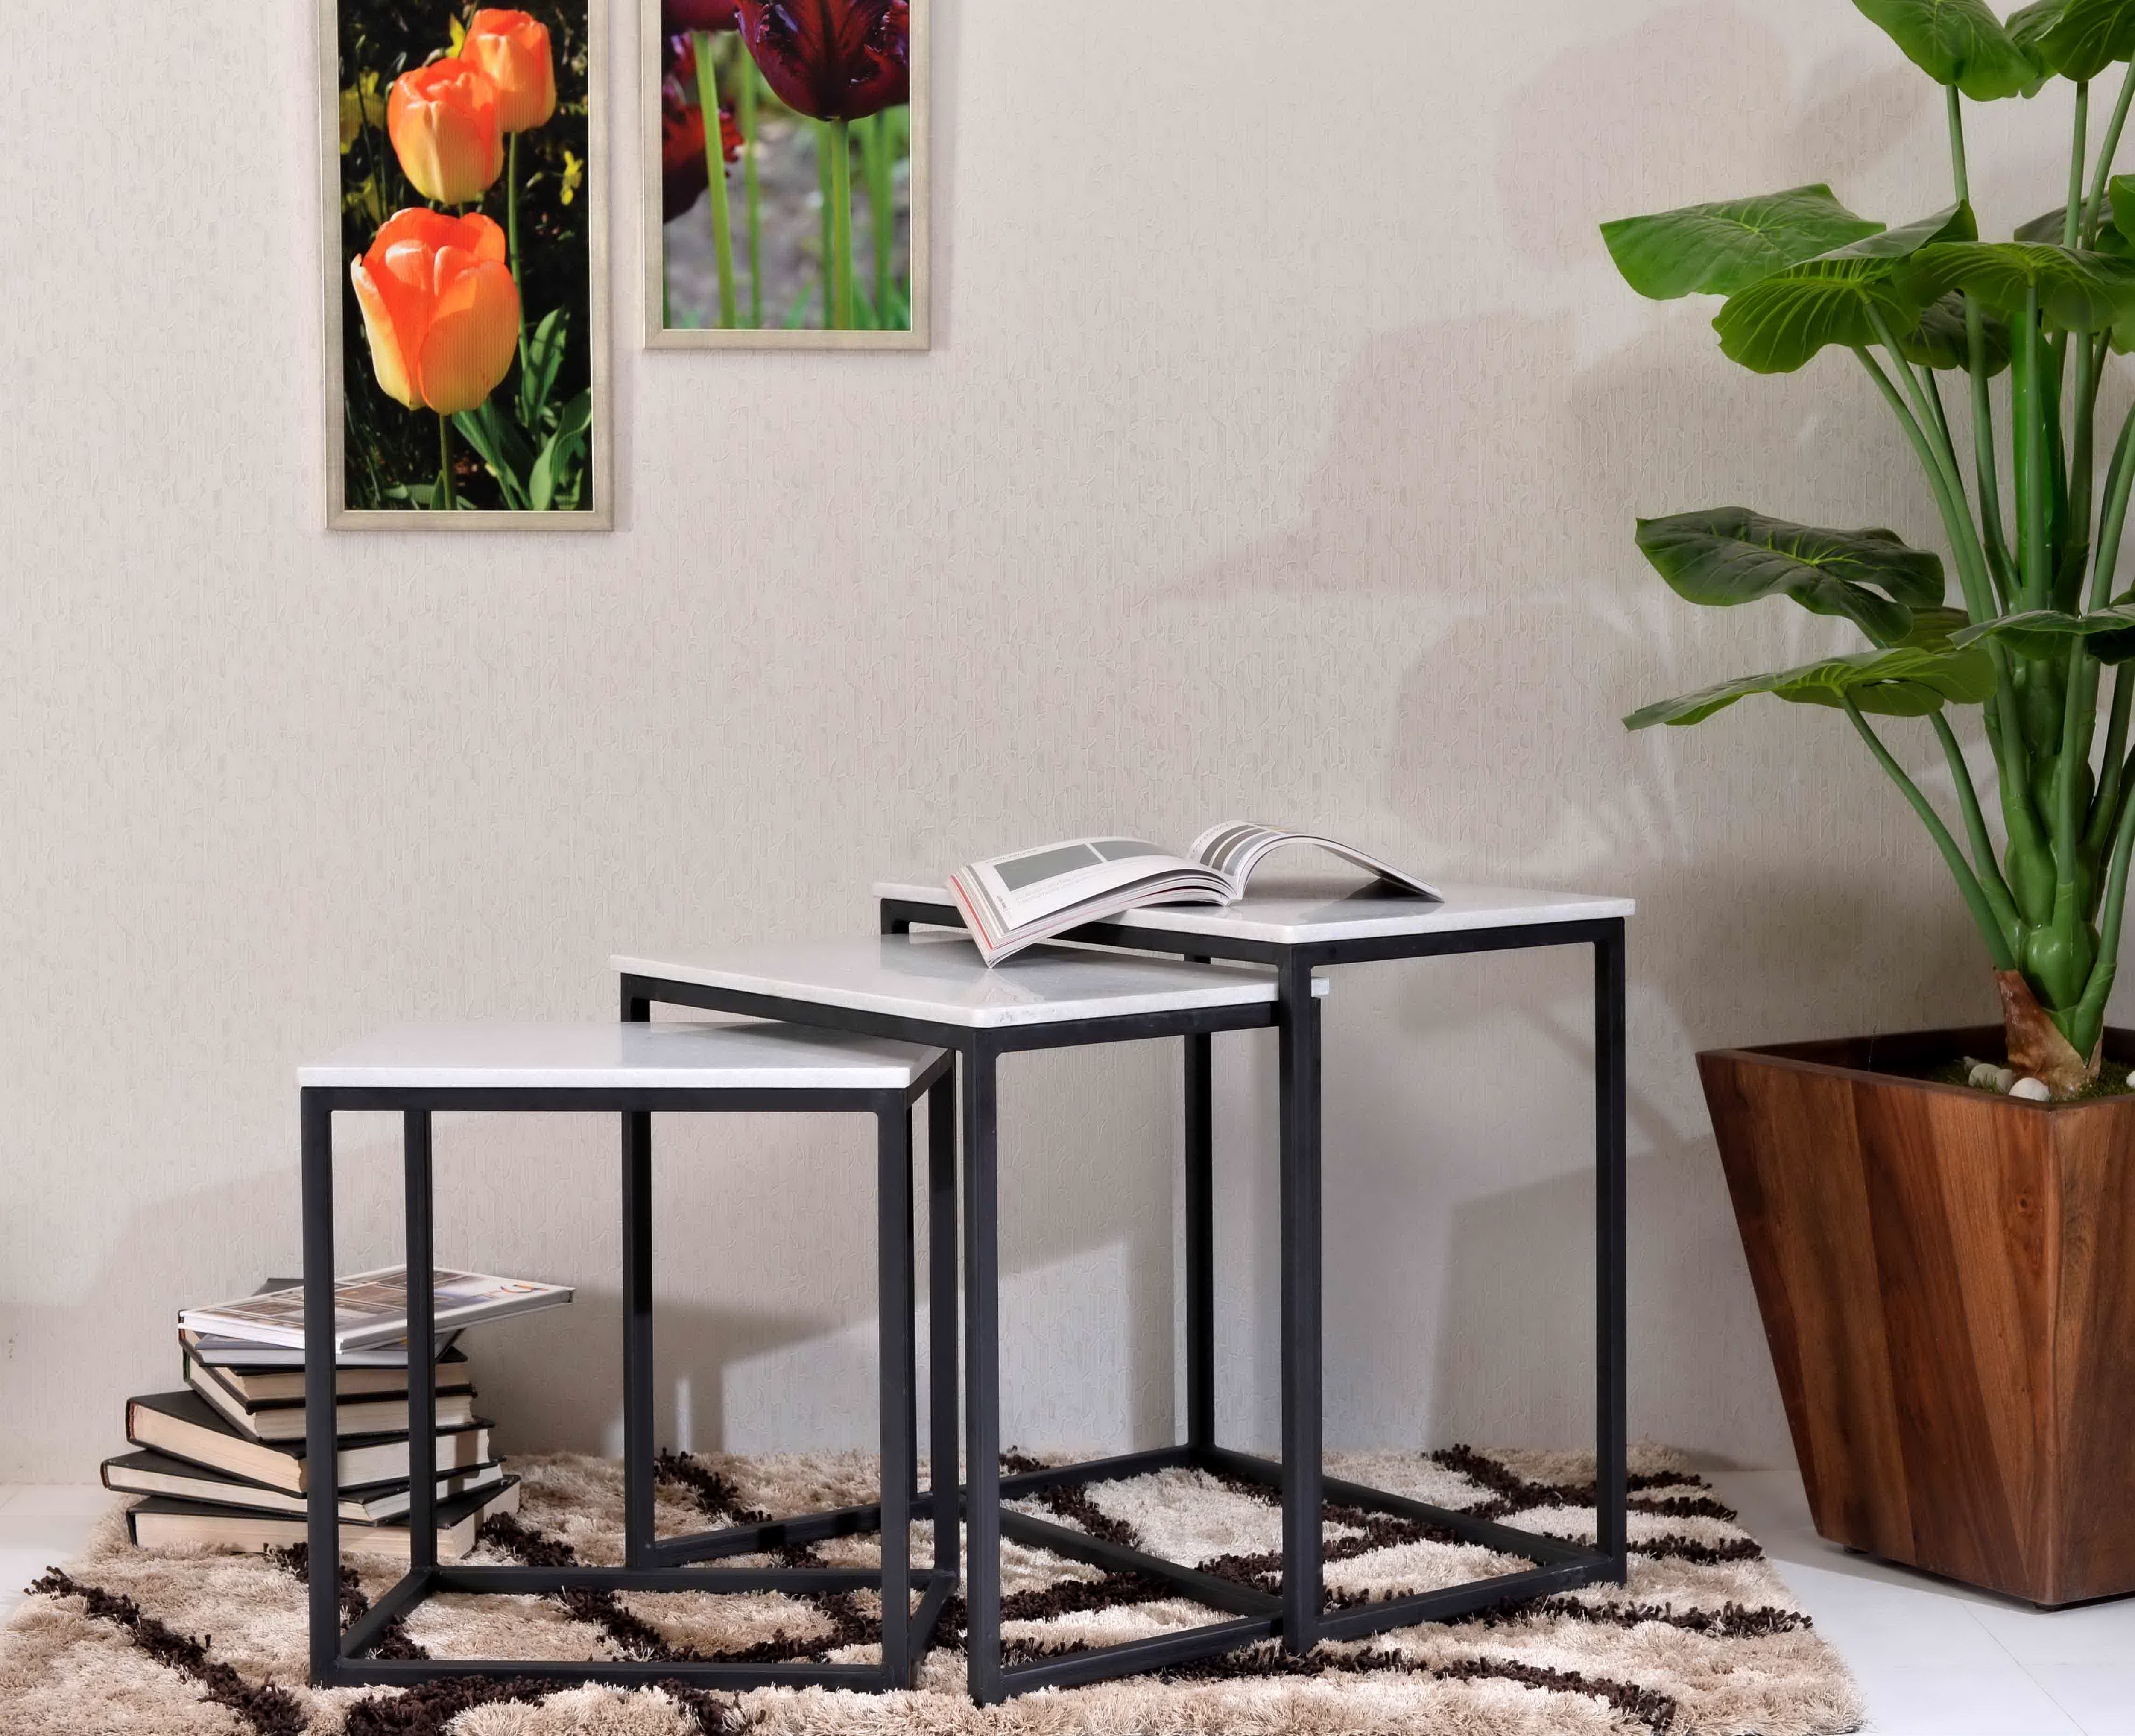 Set of Three Nesting Tables - Ponga Black - Image 4